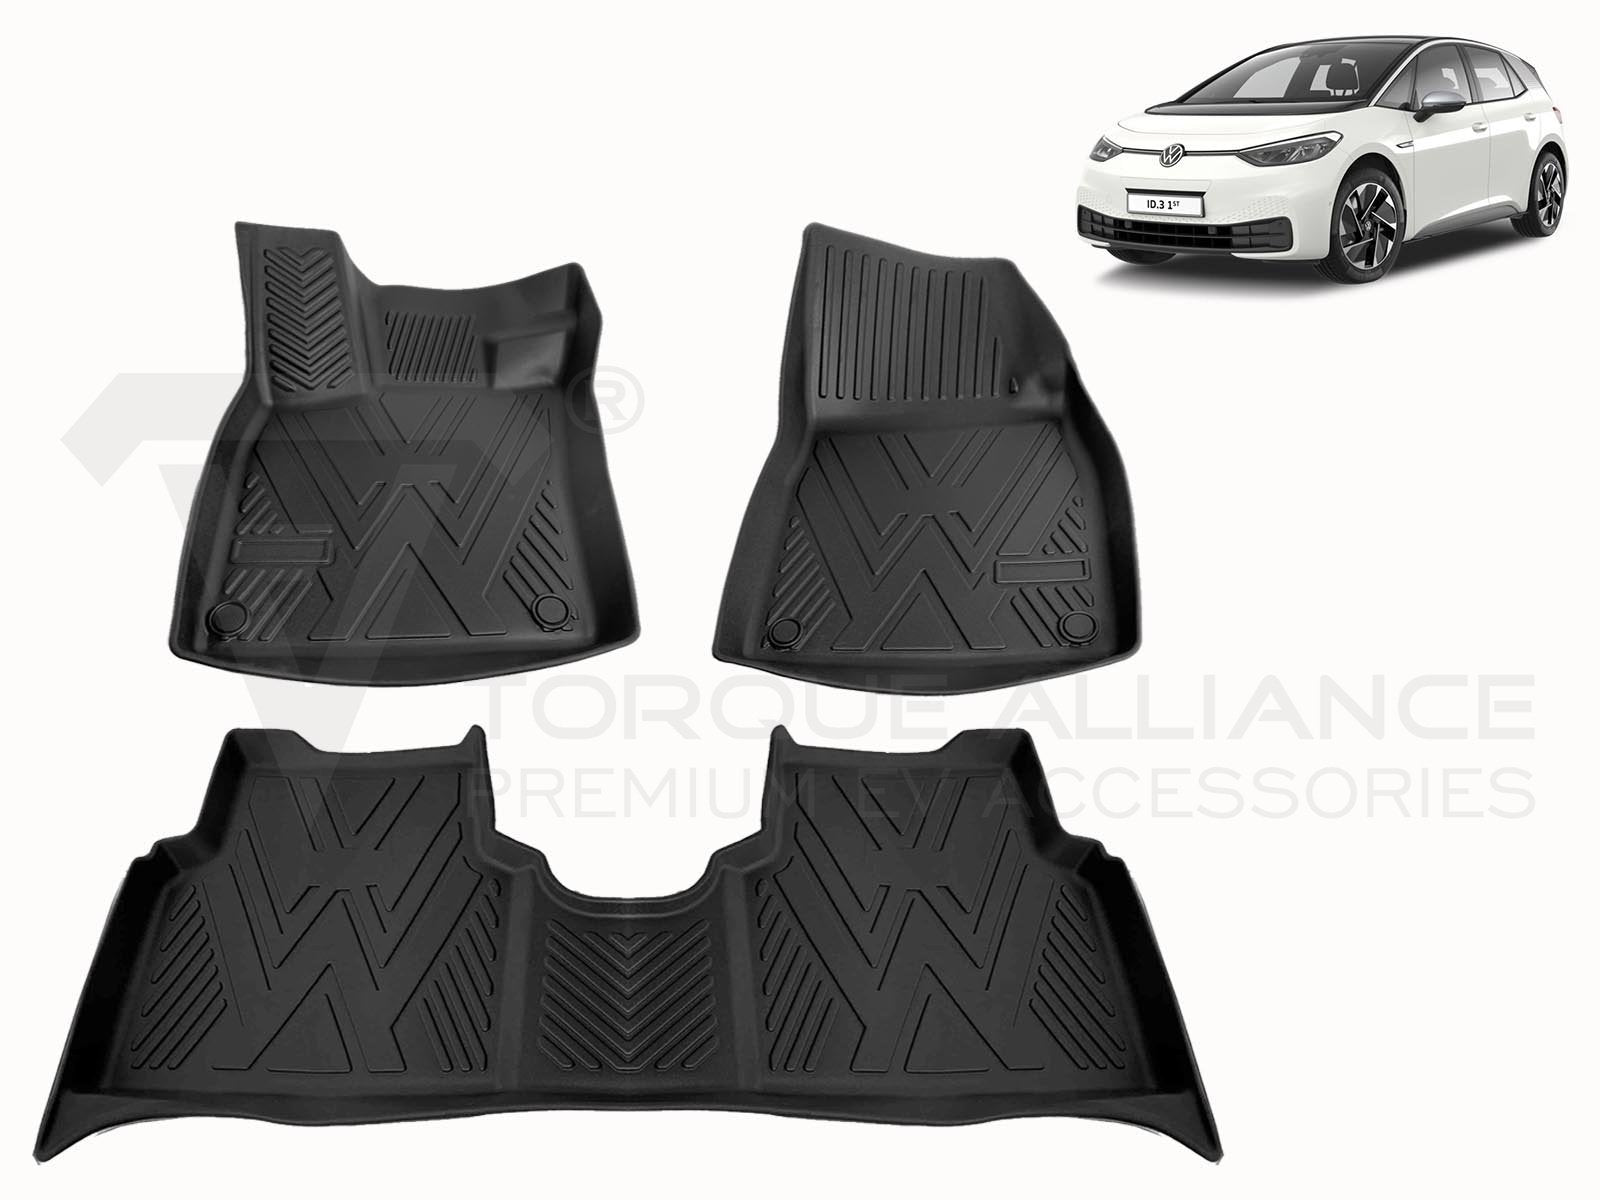 VW ID 3_Premium Rubber 3D All Weather Interior Floor Mats with Raised Edge, Left-hand-drive - Torque Alliance